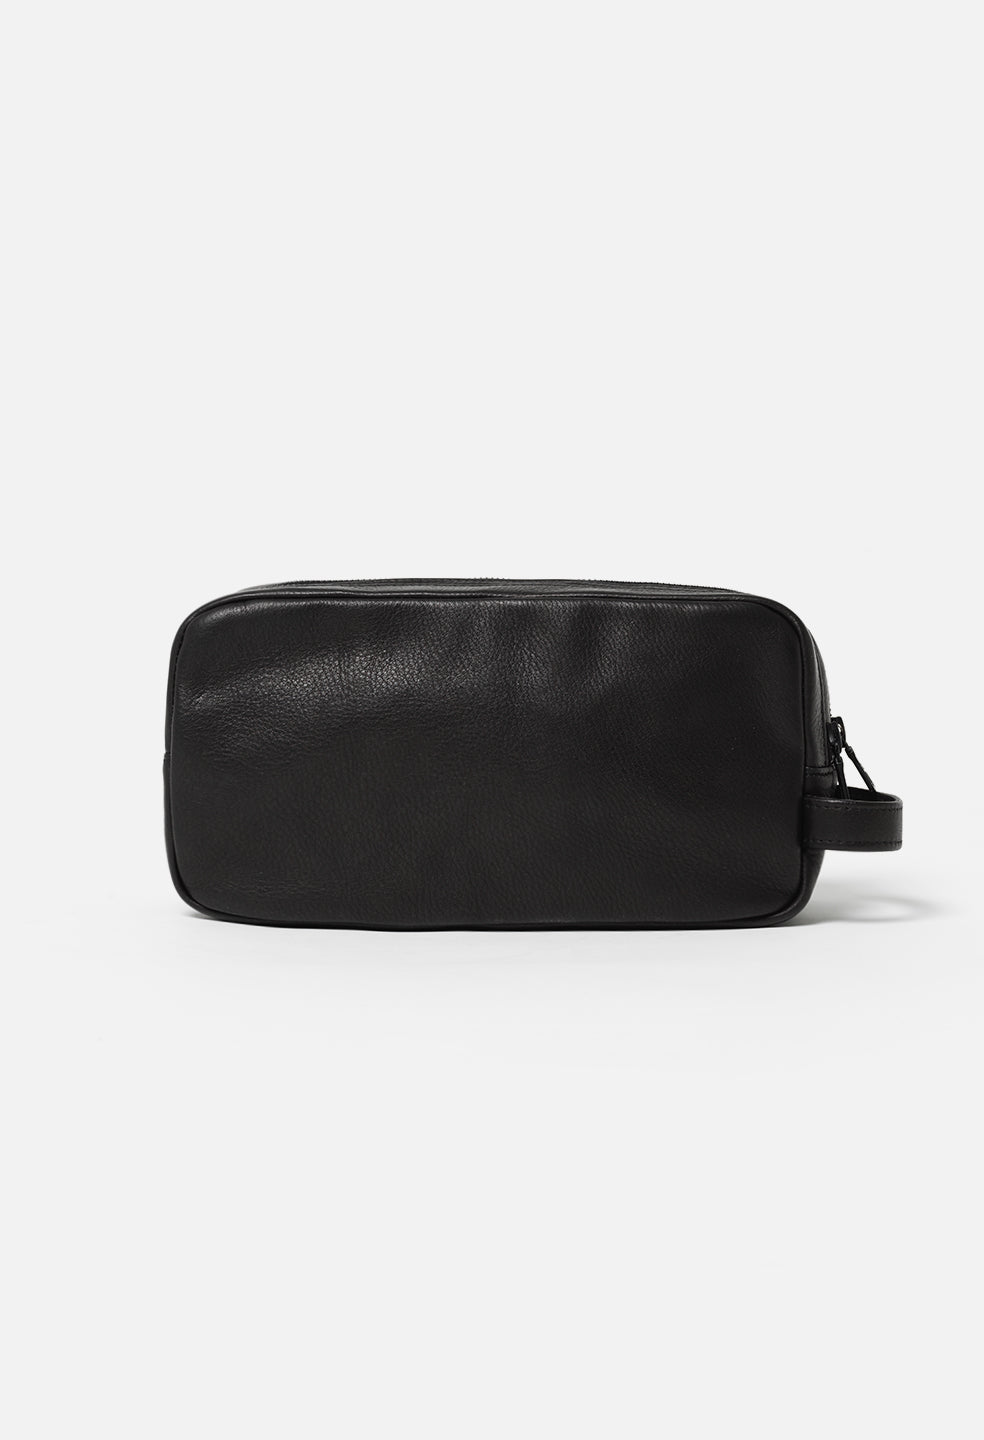 Black Leather Dopp Kit, Men's Leather Wash Bag